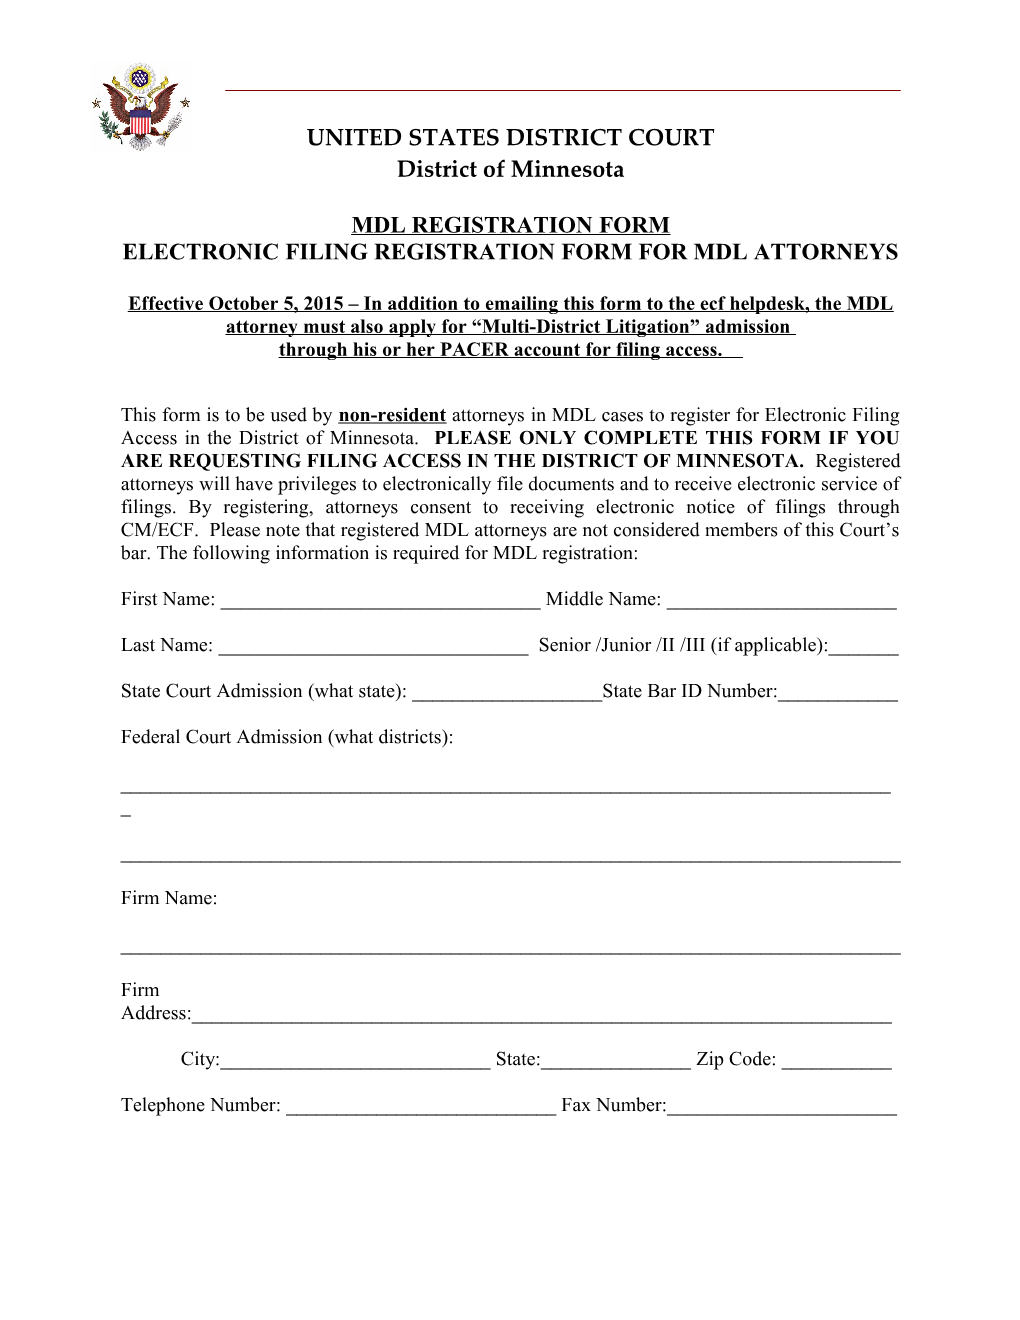 Electronic Filing Registration Form for Mdl Attorneys